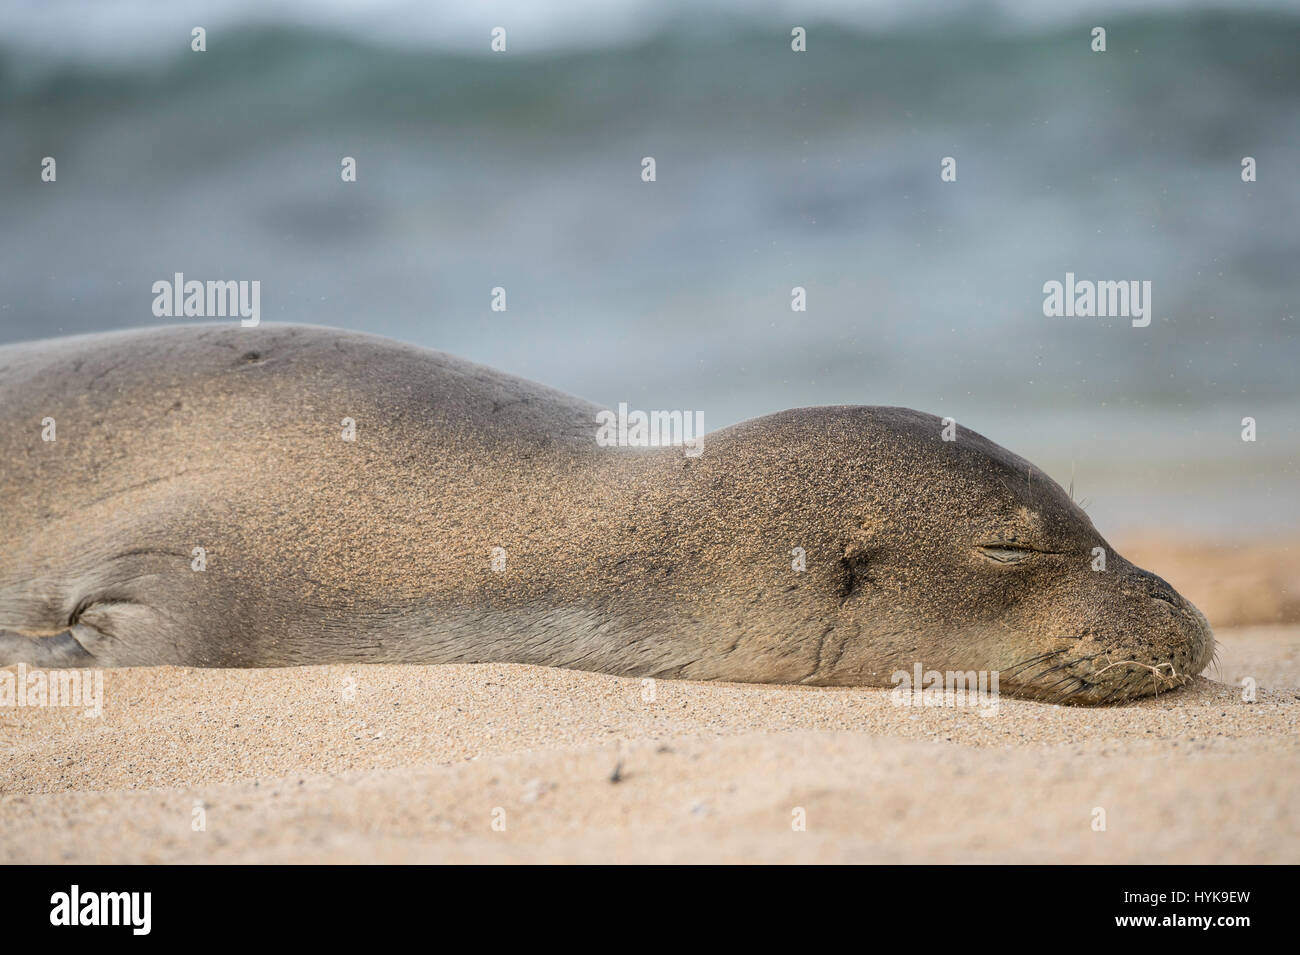 Hawaiian monk seal, Neomonachus schauinslandi, Poipu Beach Park, Kauai, Hawaii, USA Stock Photo